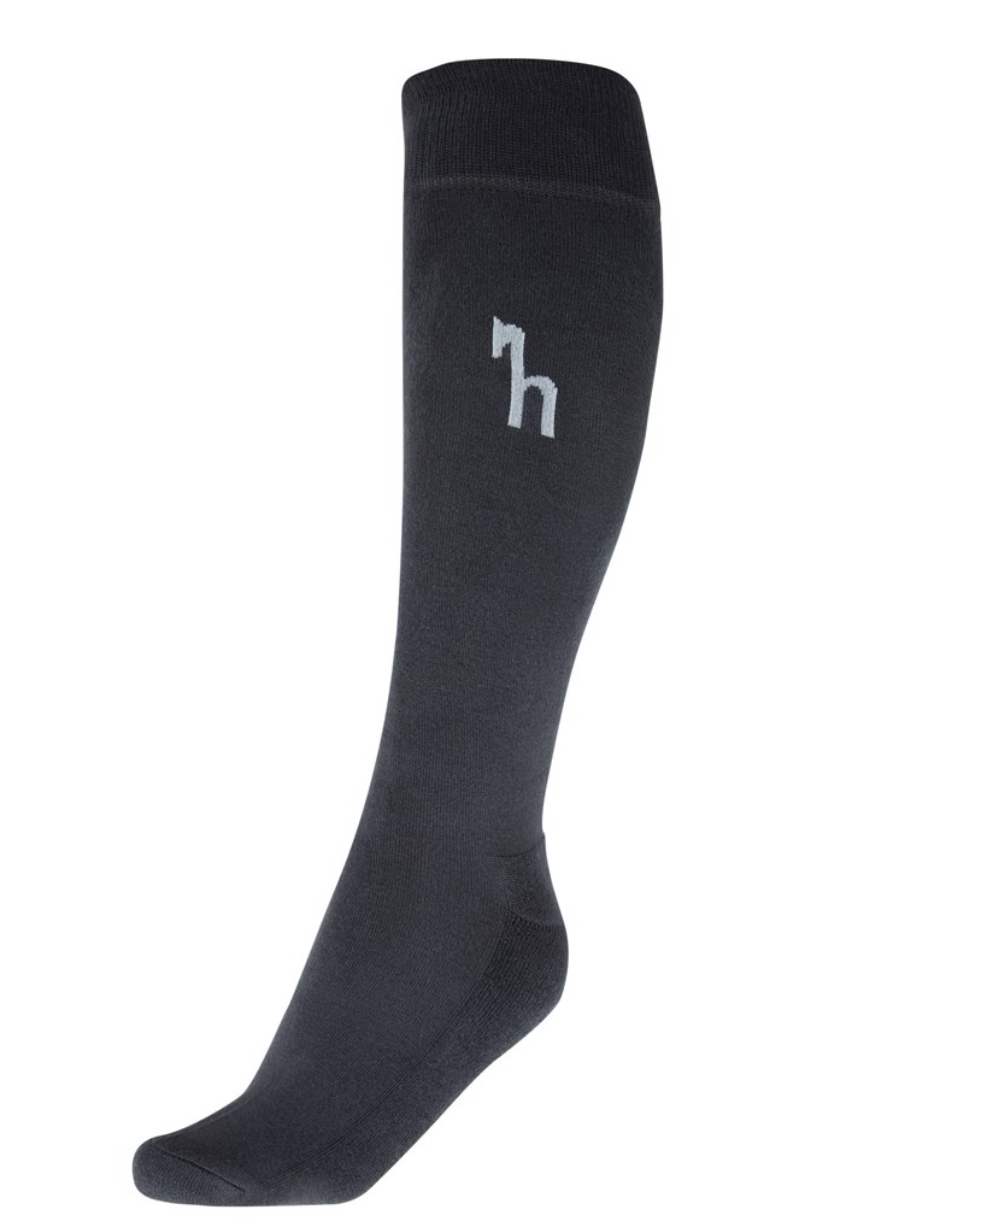 Horze Women's Bamboo Winter Knee Socks - Blackened Pearl